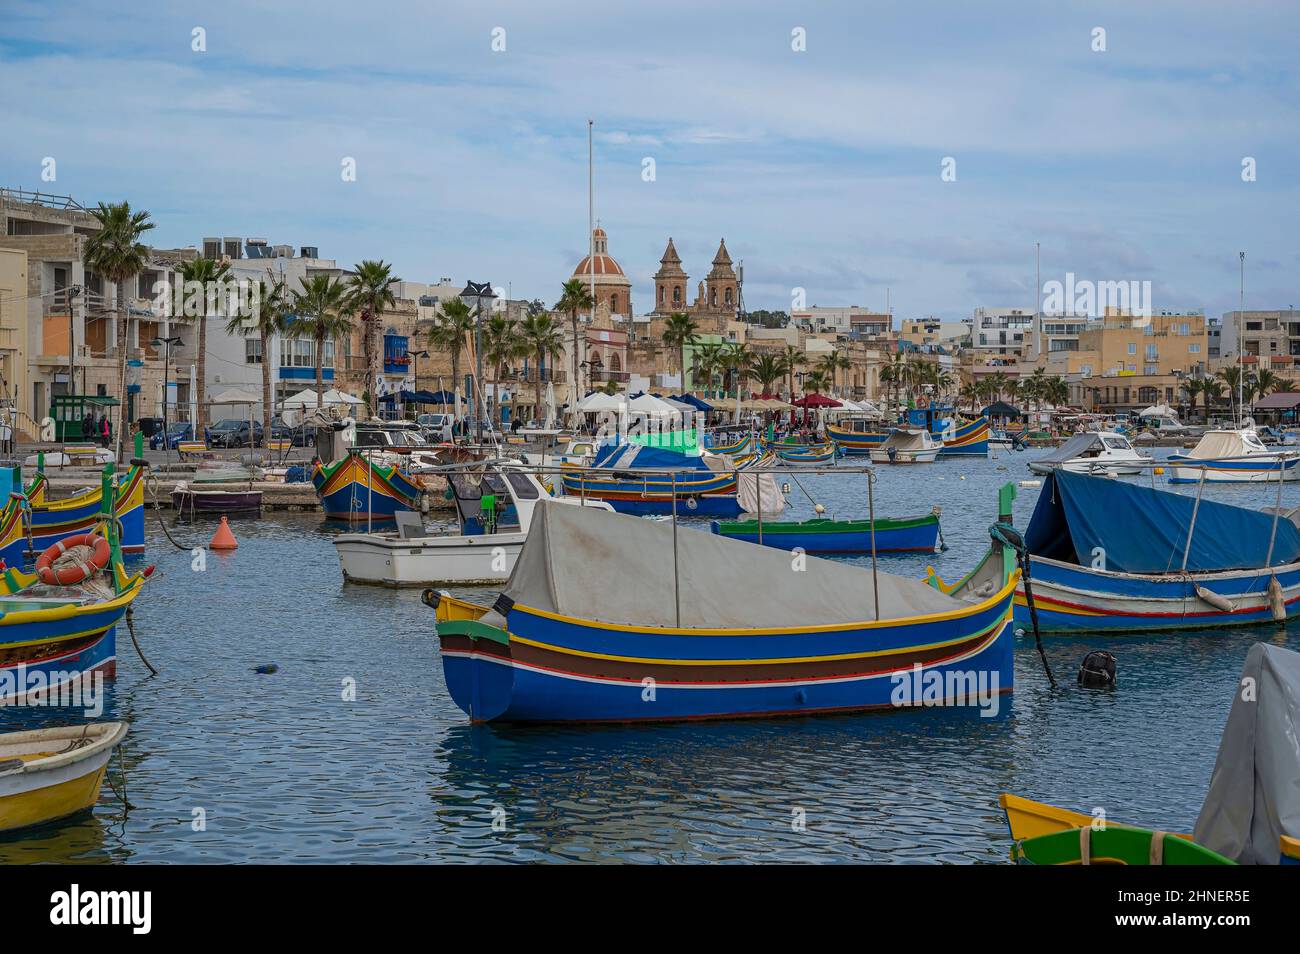 Traditional colorful fishing boats in the harbor of fishing village Marsaxlokk, Malta Stock Photo